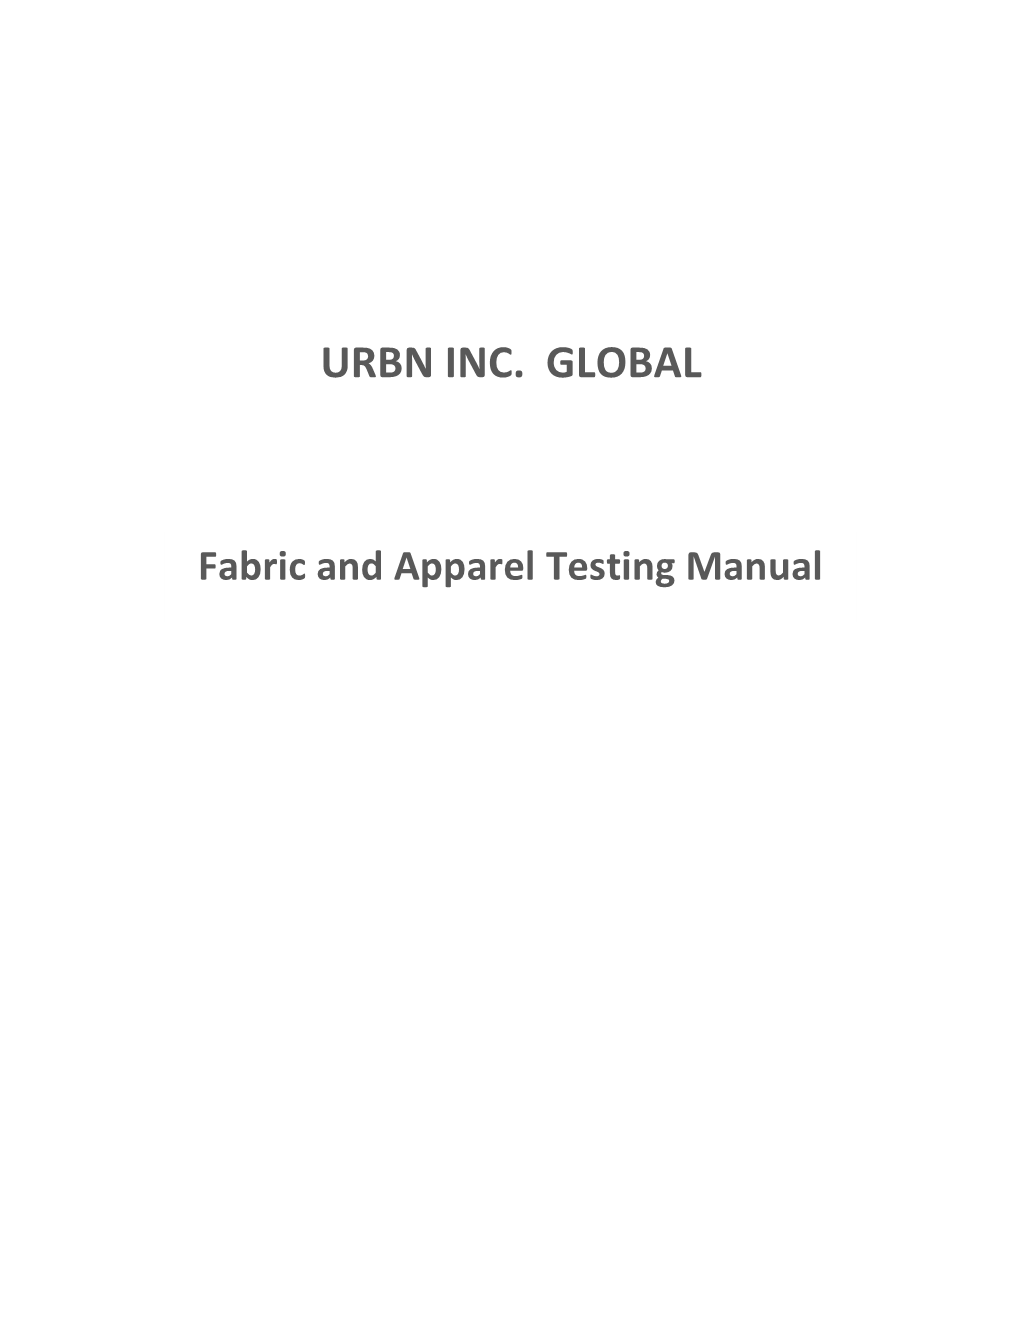 URBN Global Apparel Testing/Labeling Manual